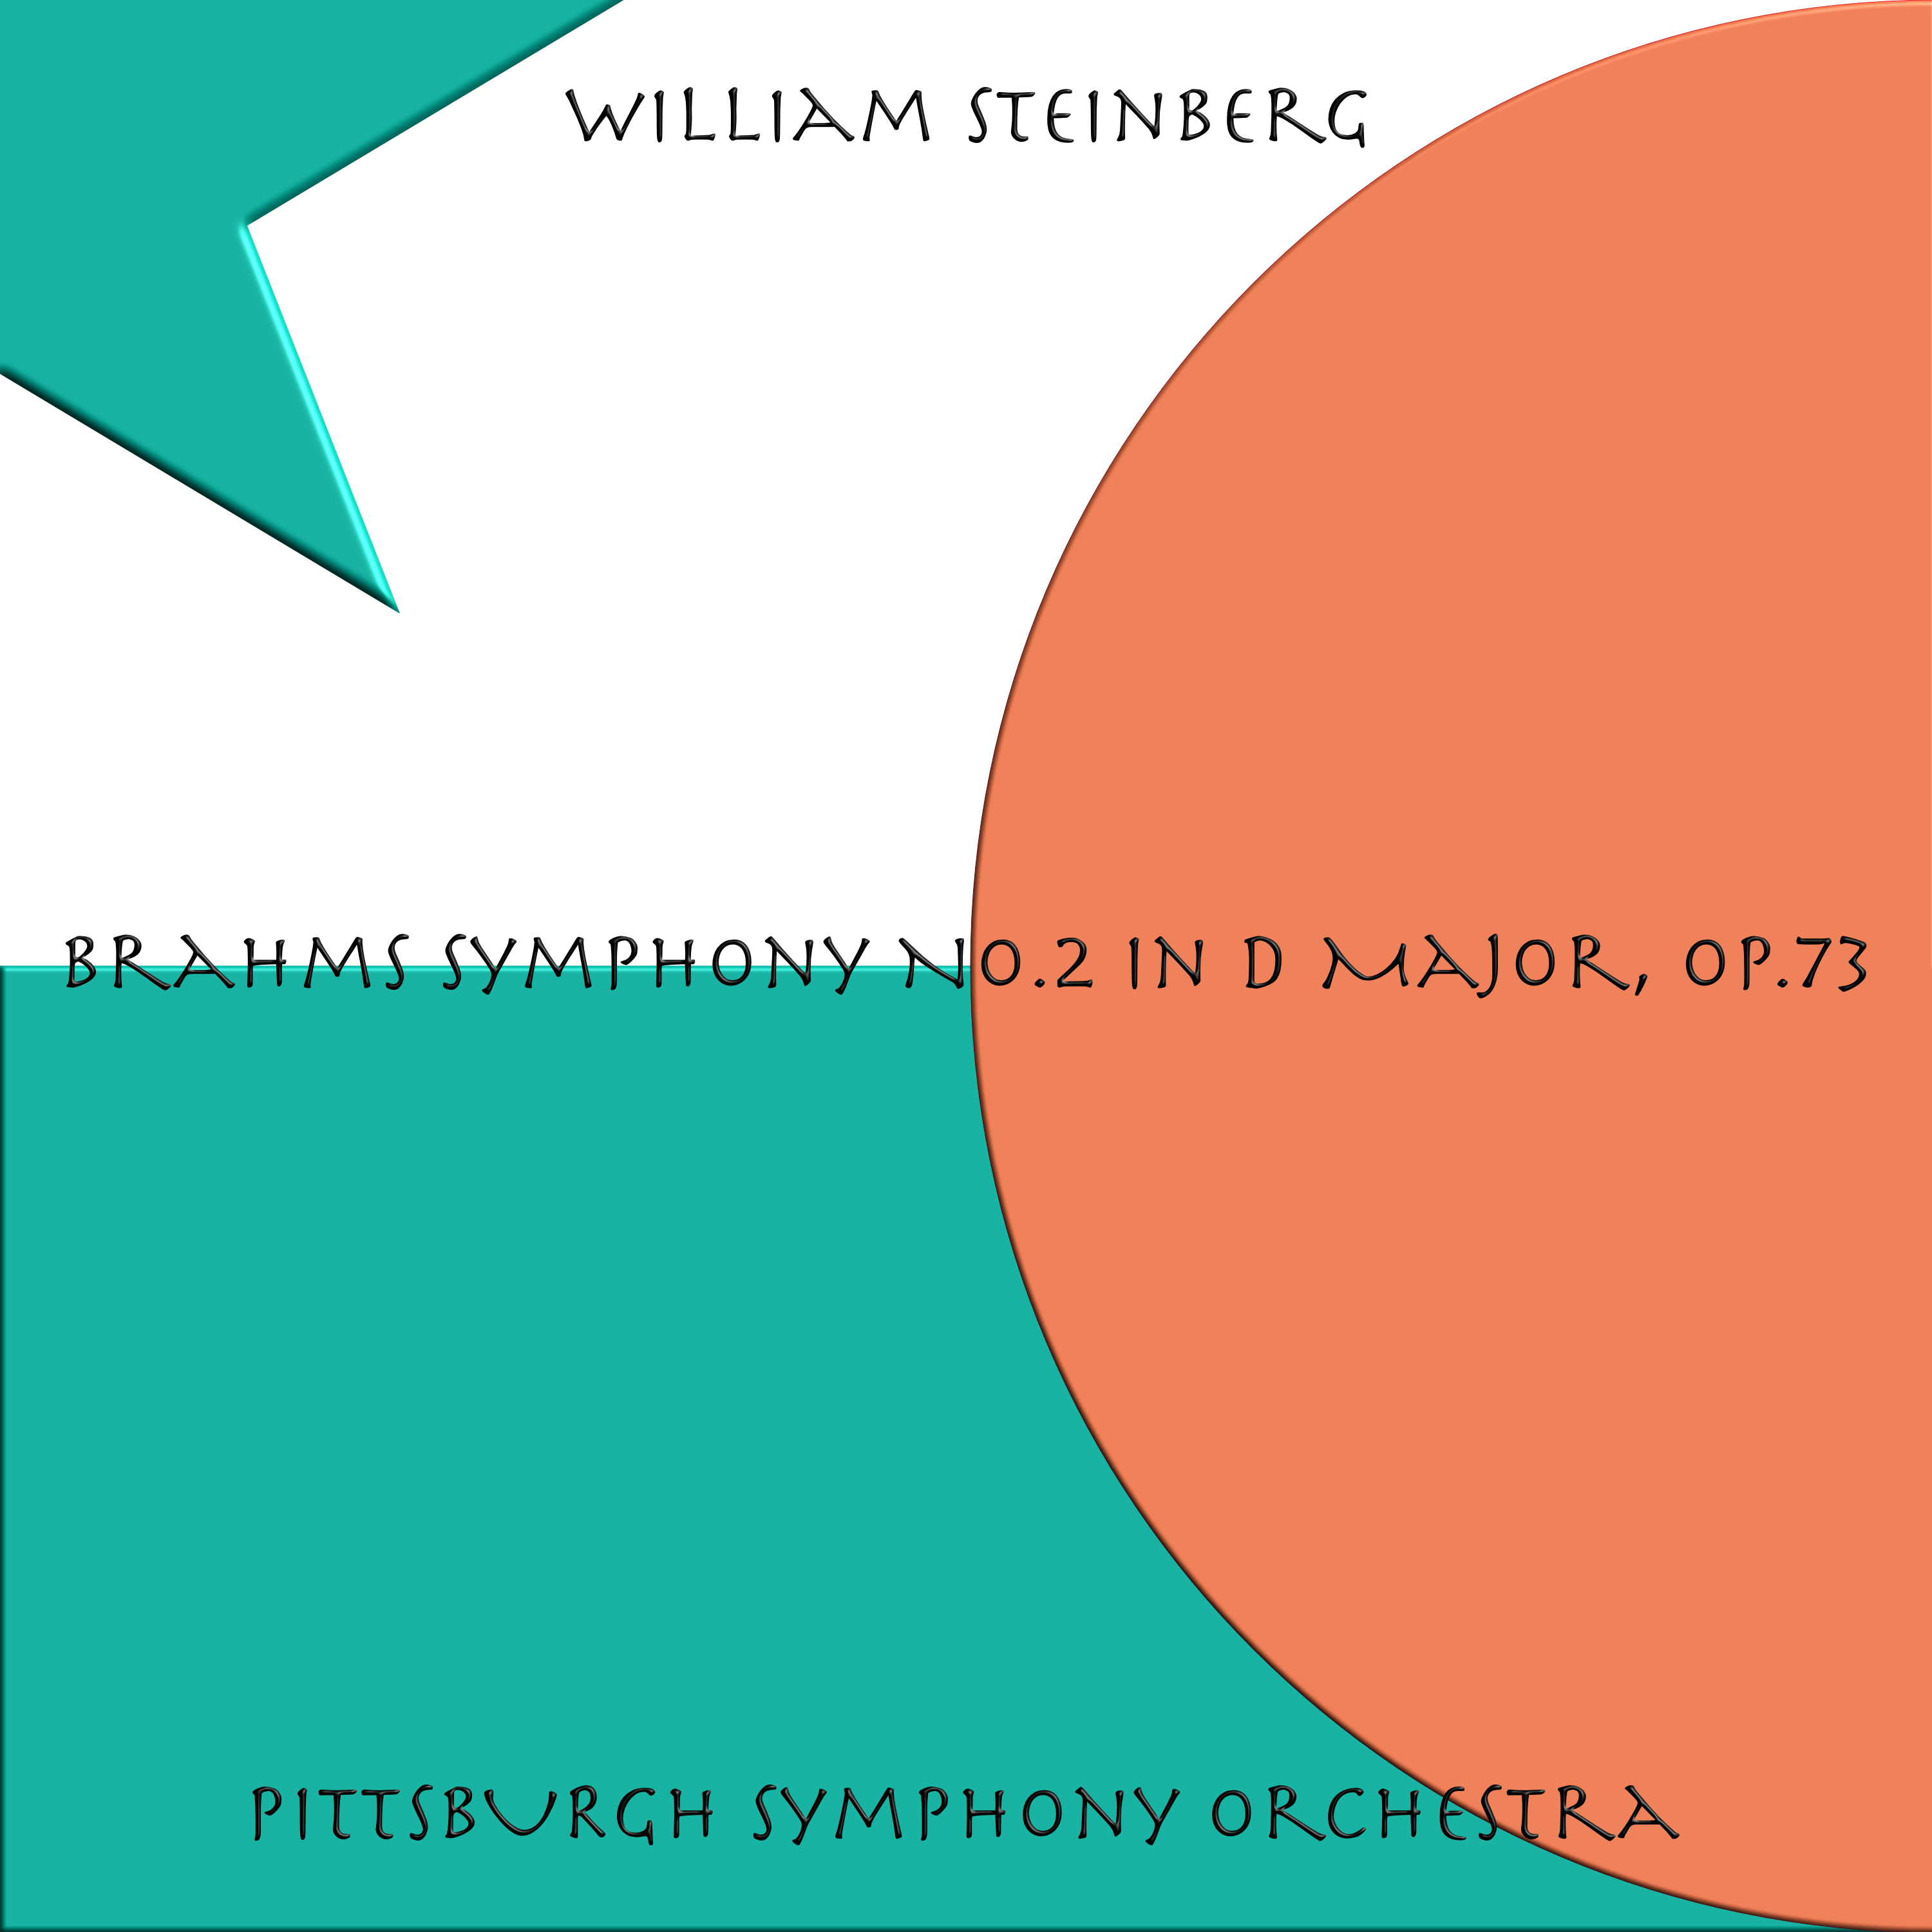 Symphony No. 2 in D Major, Op. 73: I. Allegro non troppo